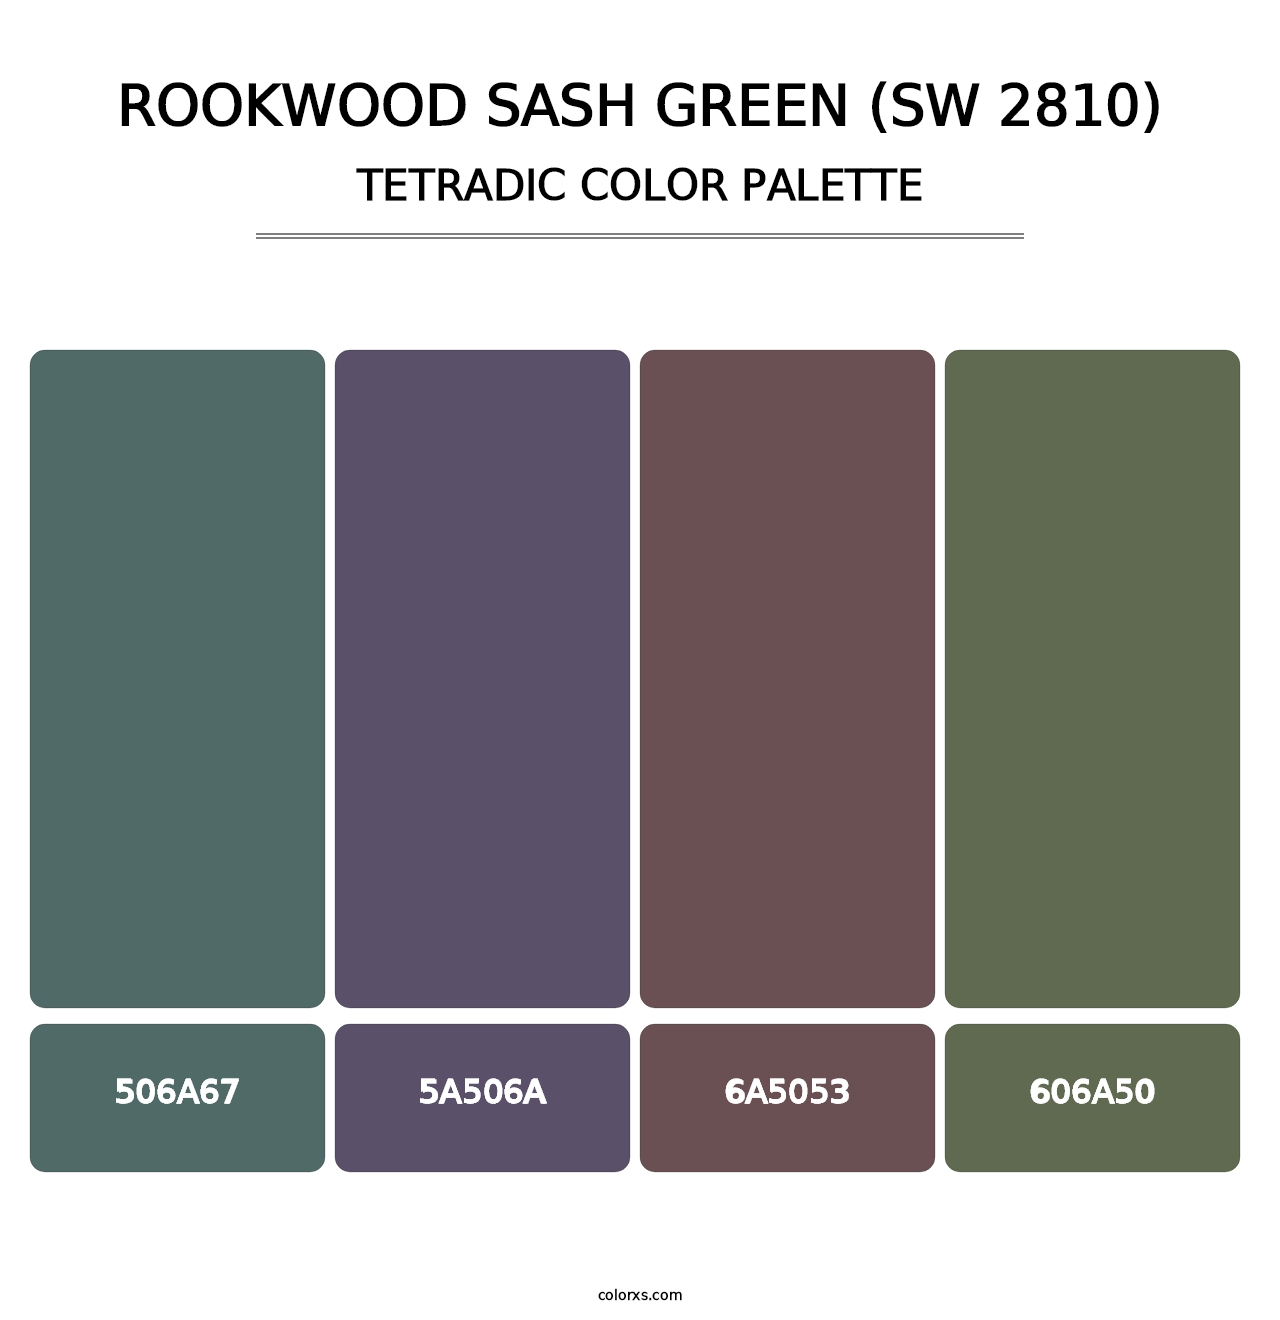 Rookwood Sash Green (SW 2810) - Tetradic Color Palette